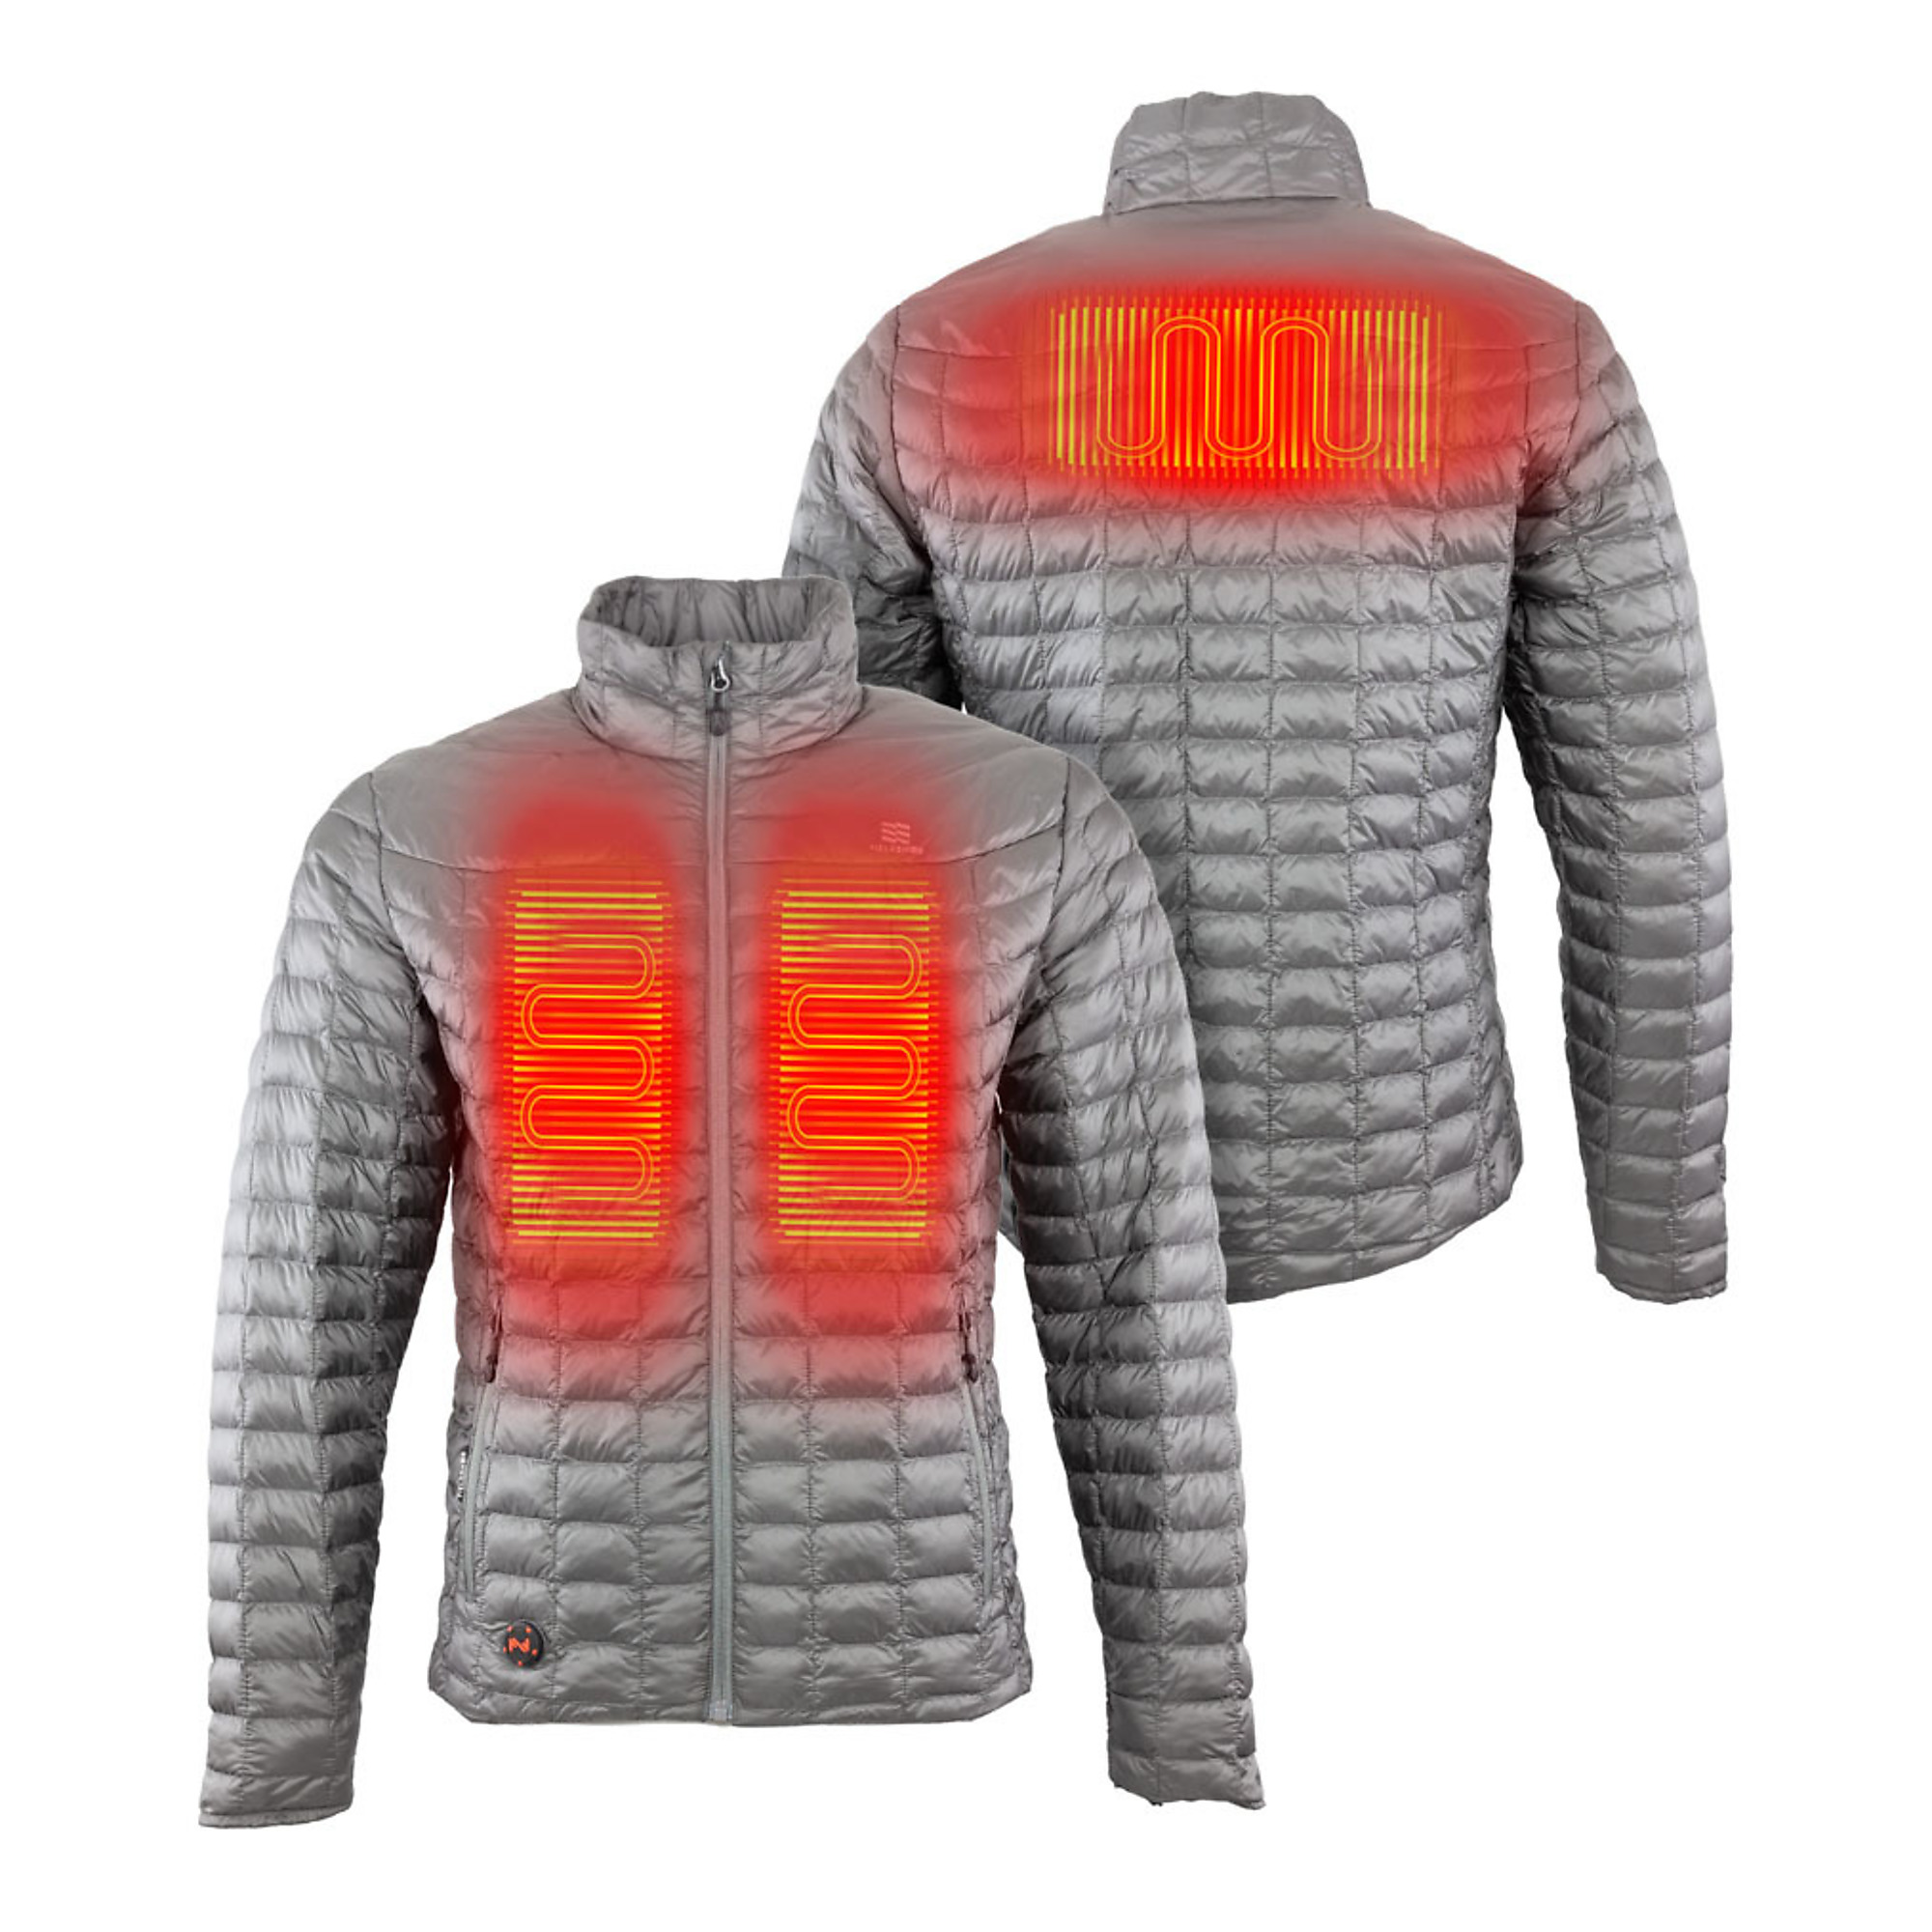 Fieldsheer, Men's Backcountry Heated Jacket with 7.4v Battery, Size S, Color Grey, Model MWMJ04320220